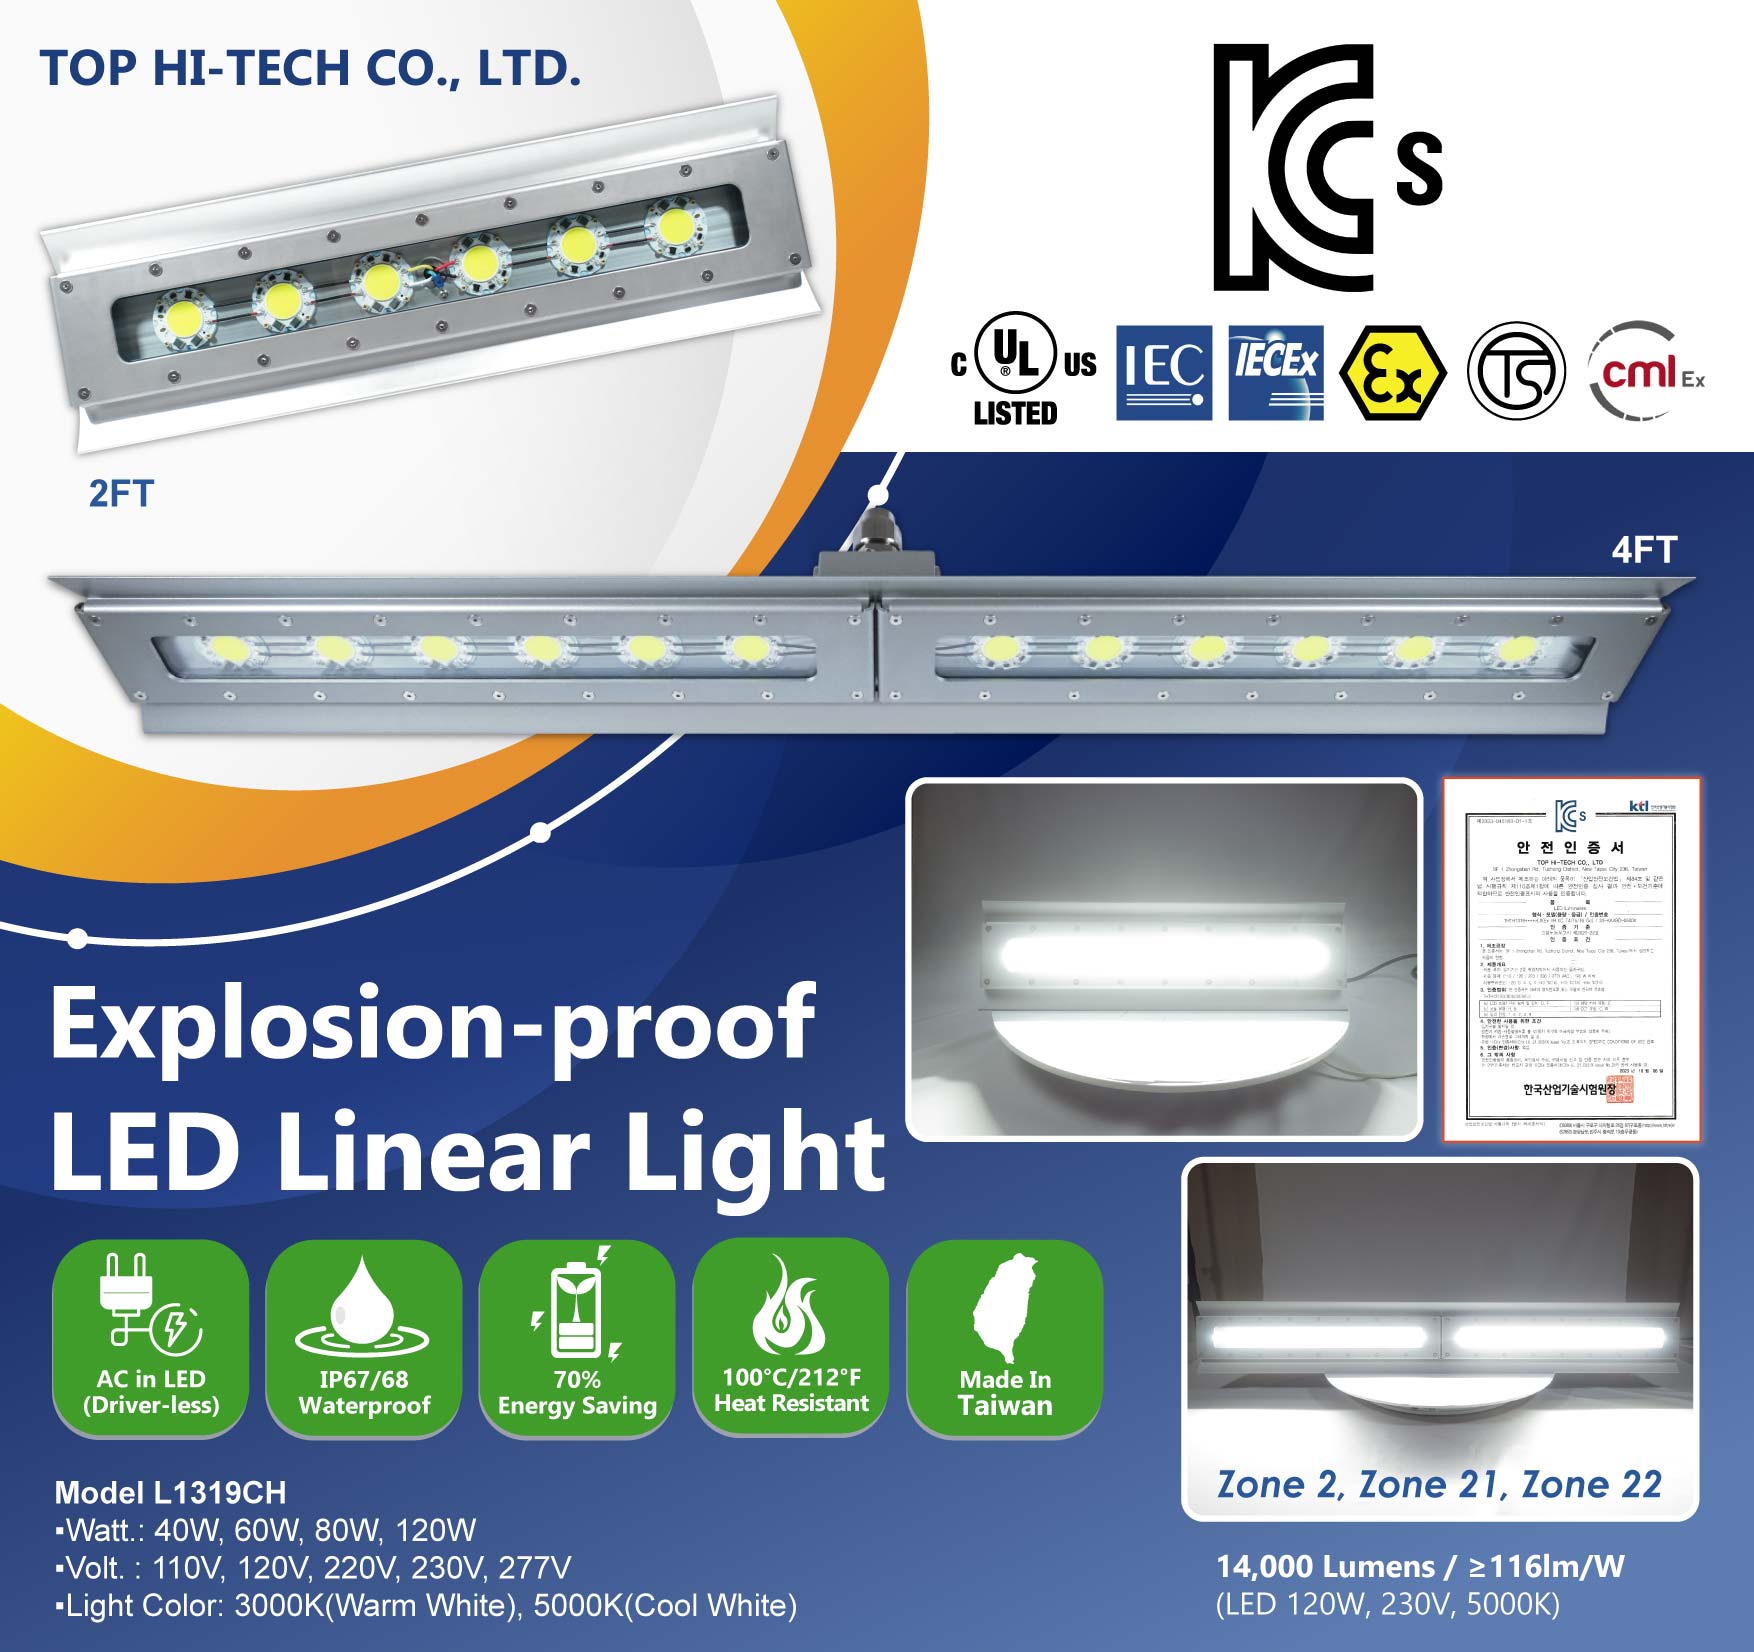 KCs Ex Certified Explosion-Proof Light L1319CH